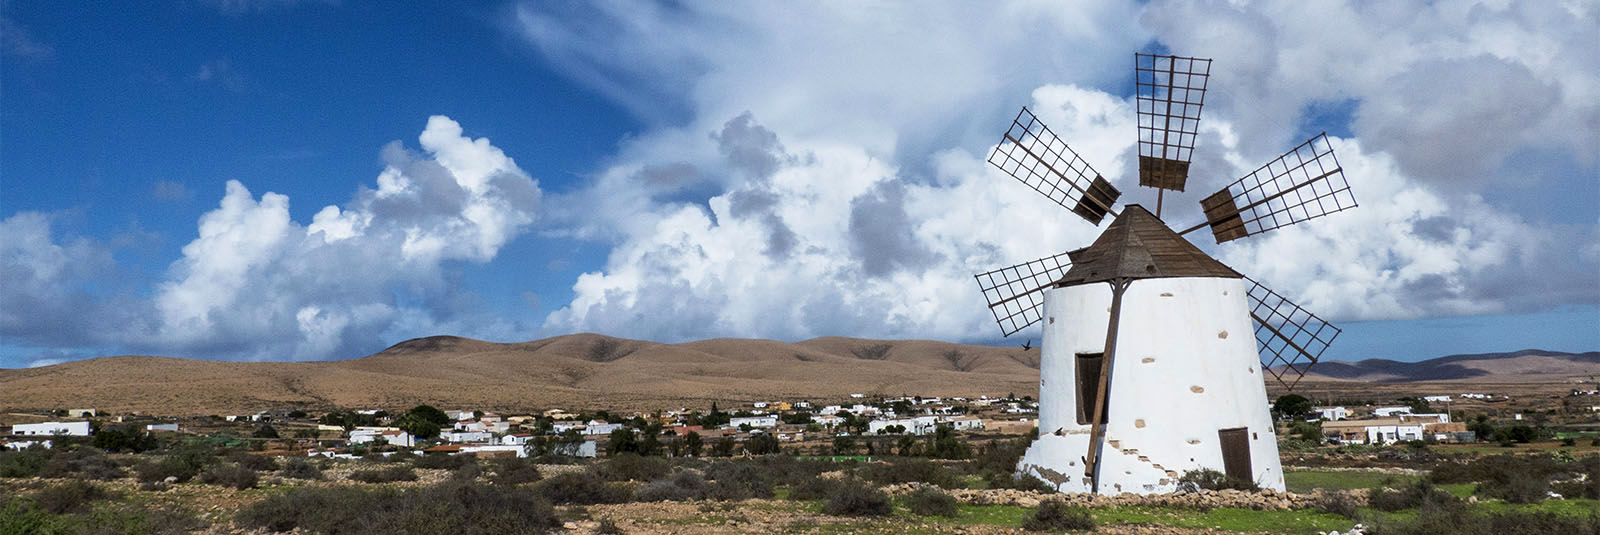 Städte und Ortschaften Fuerteventuras: Llanos de la Concepcion